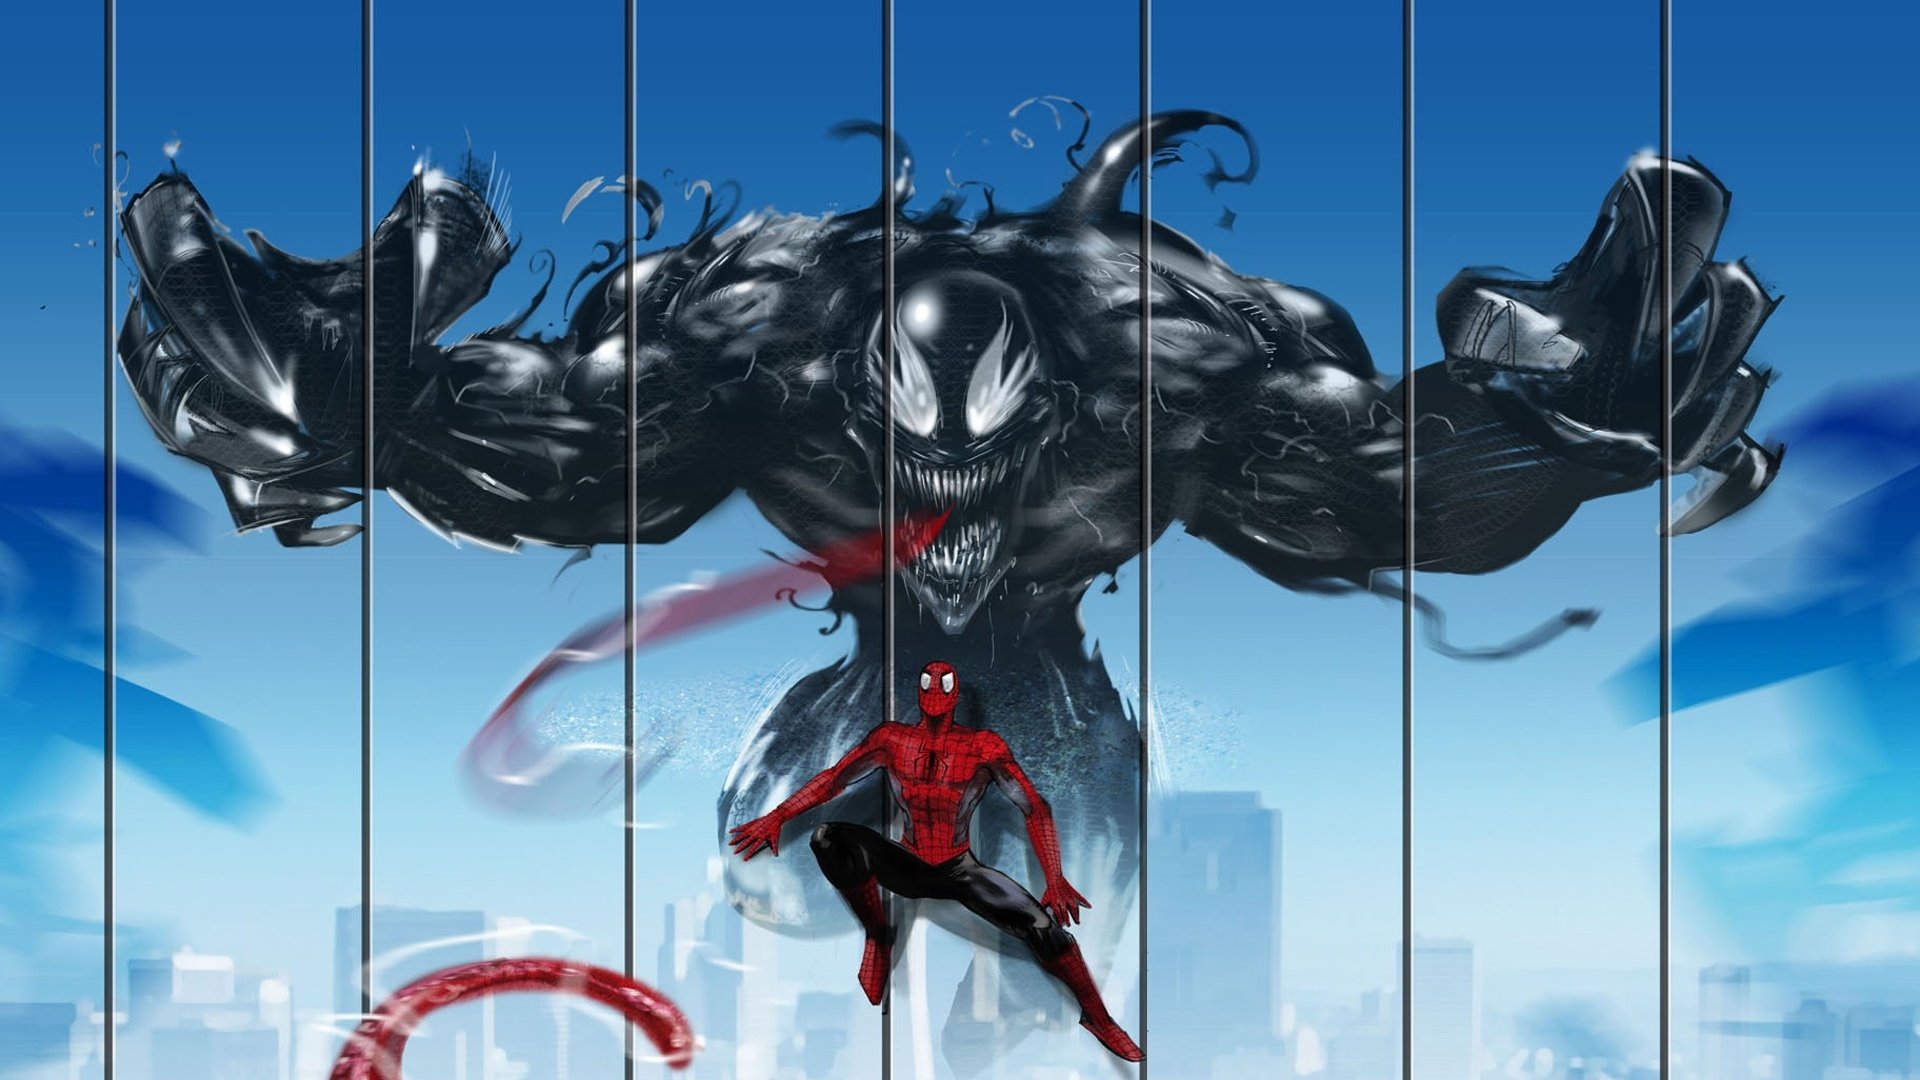  Spider Man  wallpapers  HD  for desktop backgrounds 